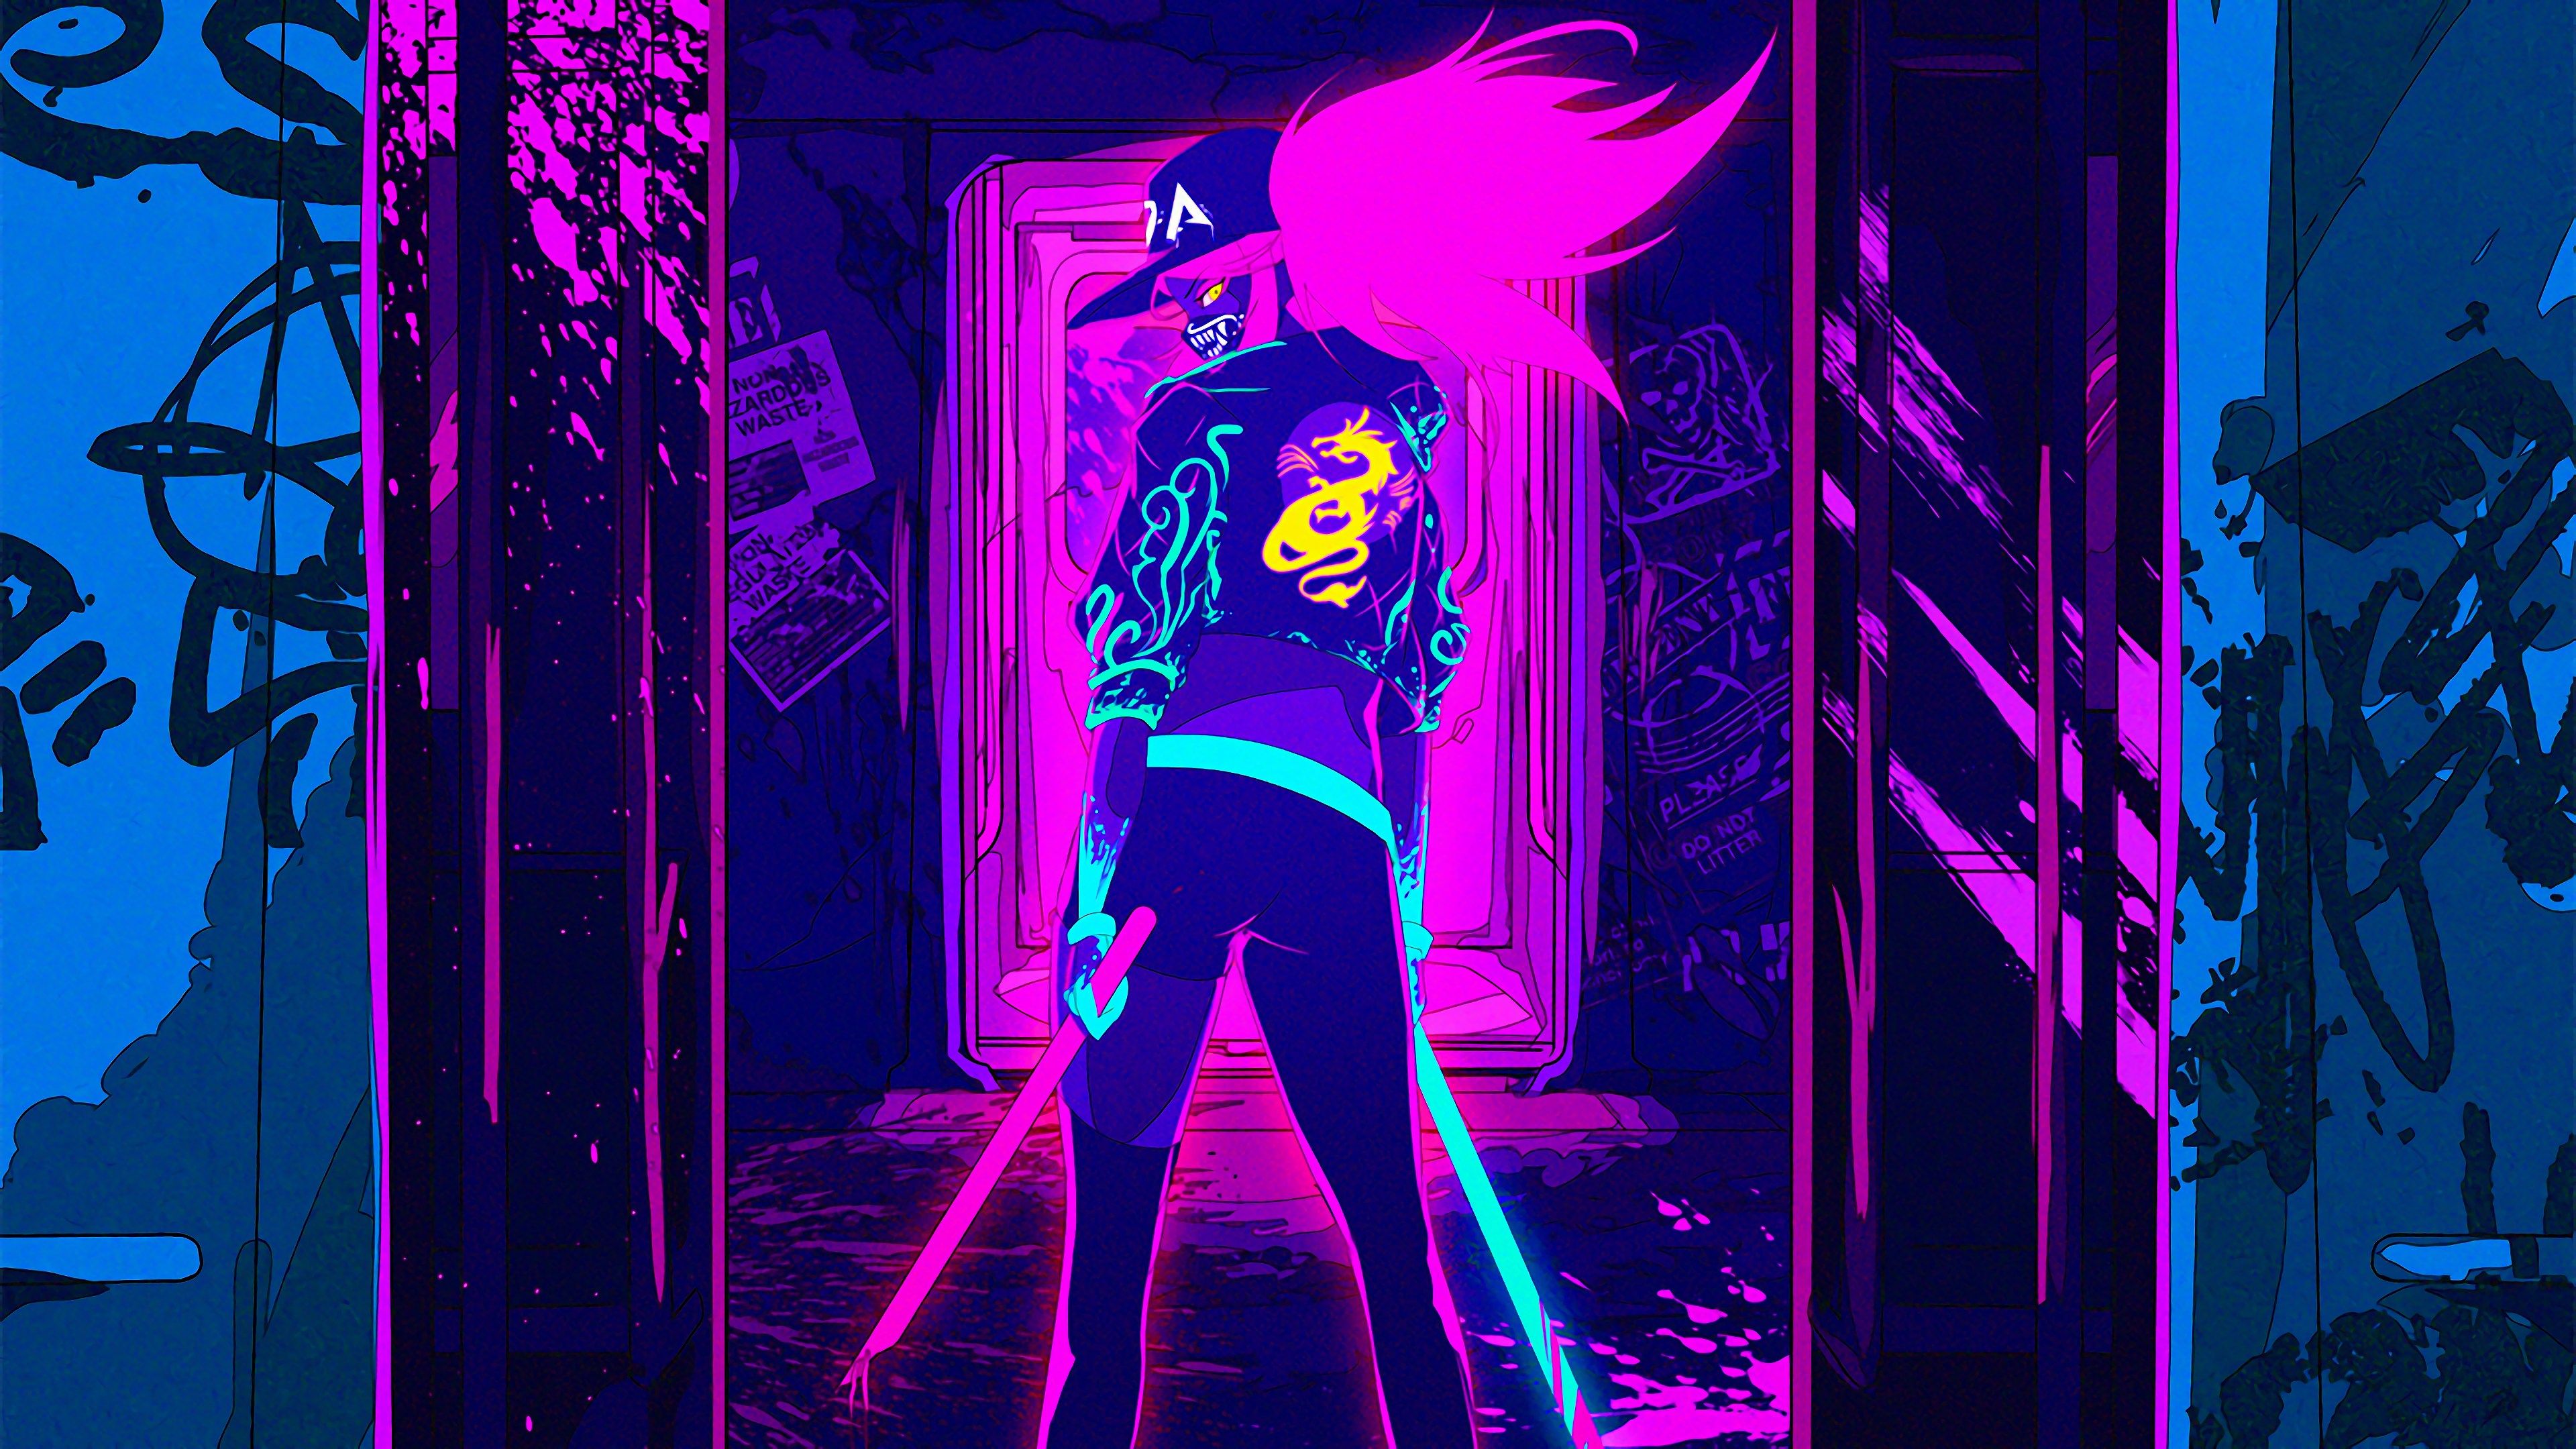 Wallpaper, cyberpunk, neon, 4k, pink, yellow, light blue, entertainment, game characters 3840x2160